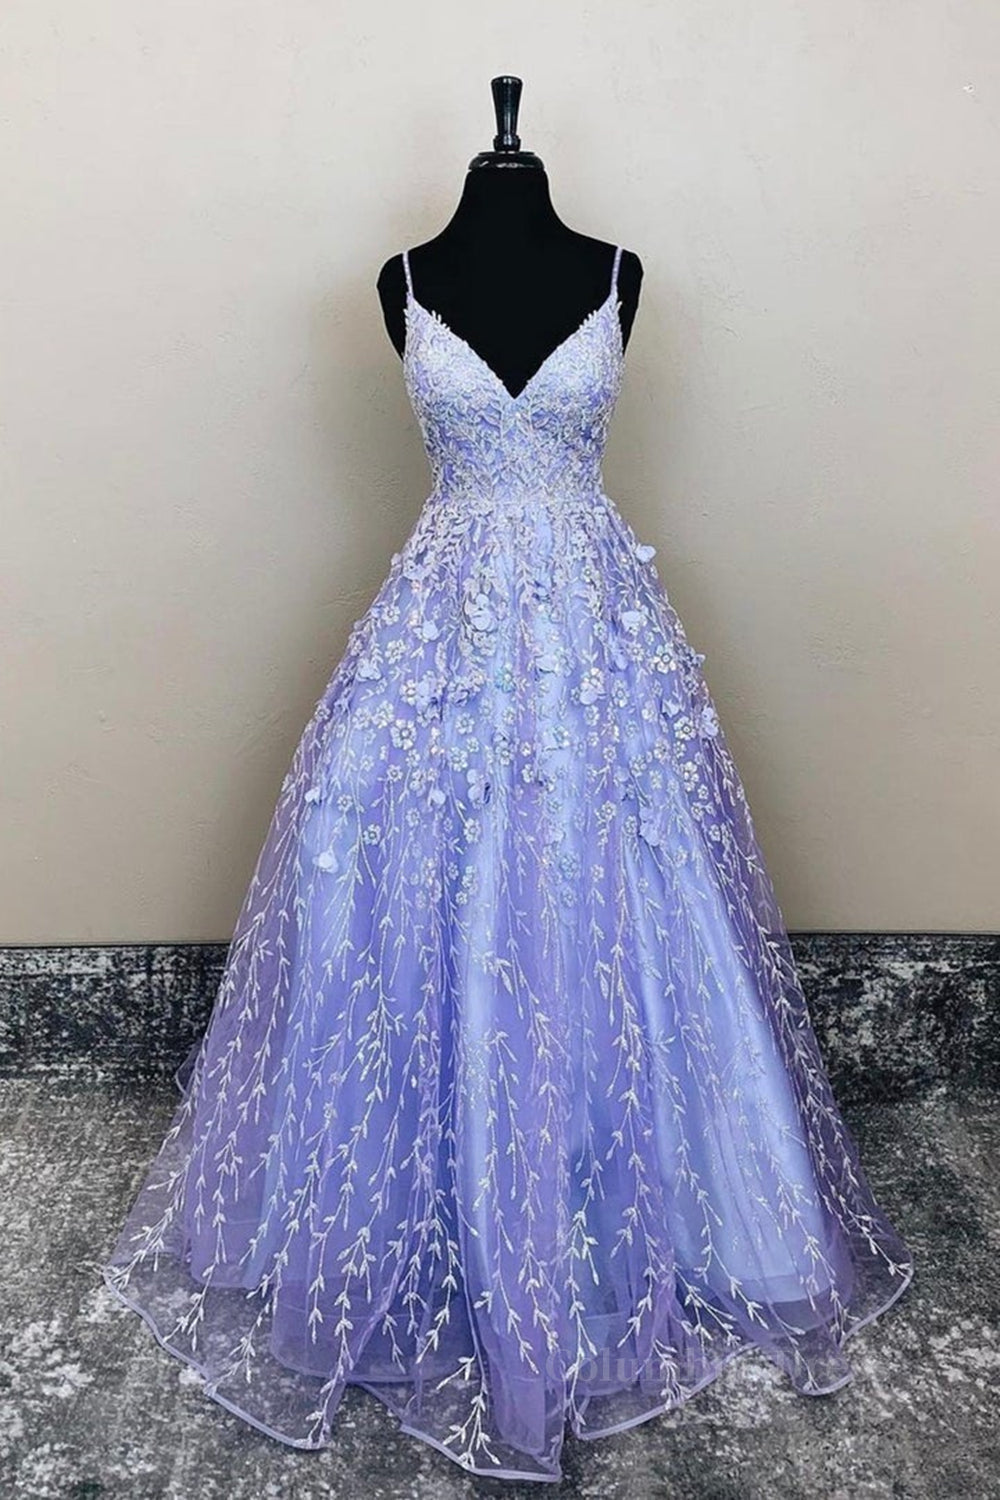 Bridesmaid Dresses Shop, V Neck Open Back Purple Lace Floral Long Prom Dress, Purple Lace Floral Formal Evening Dress